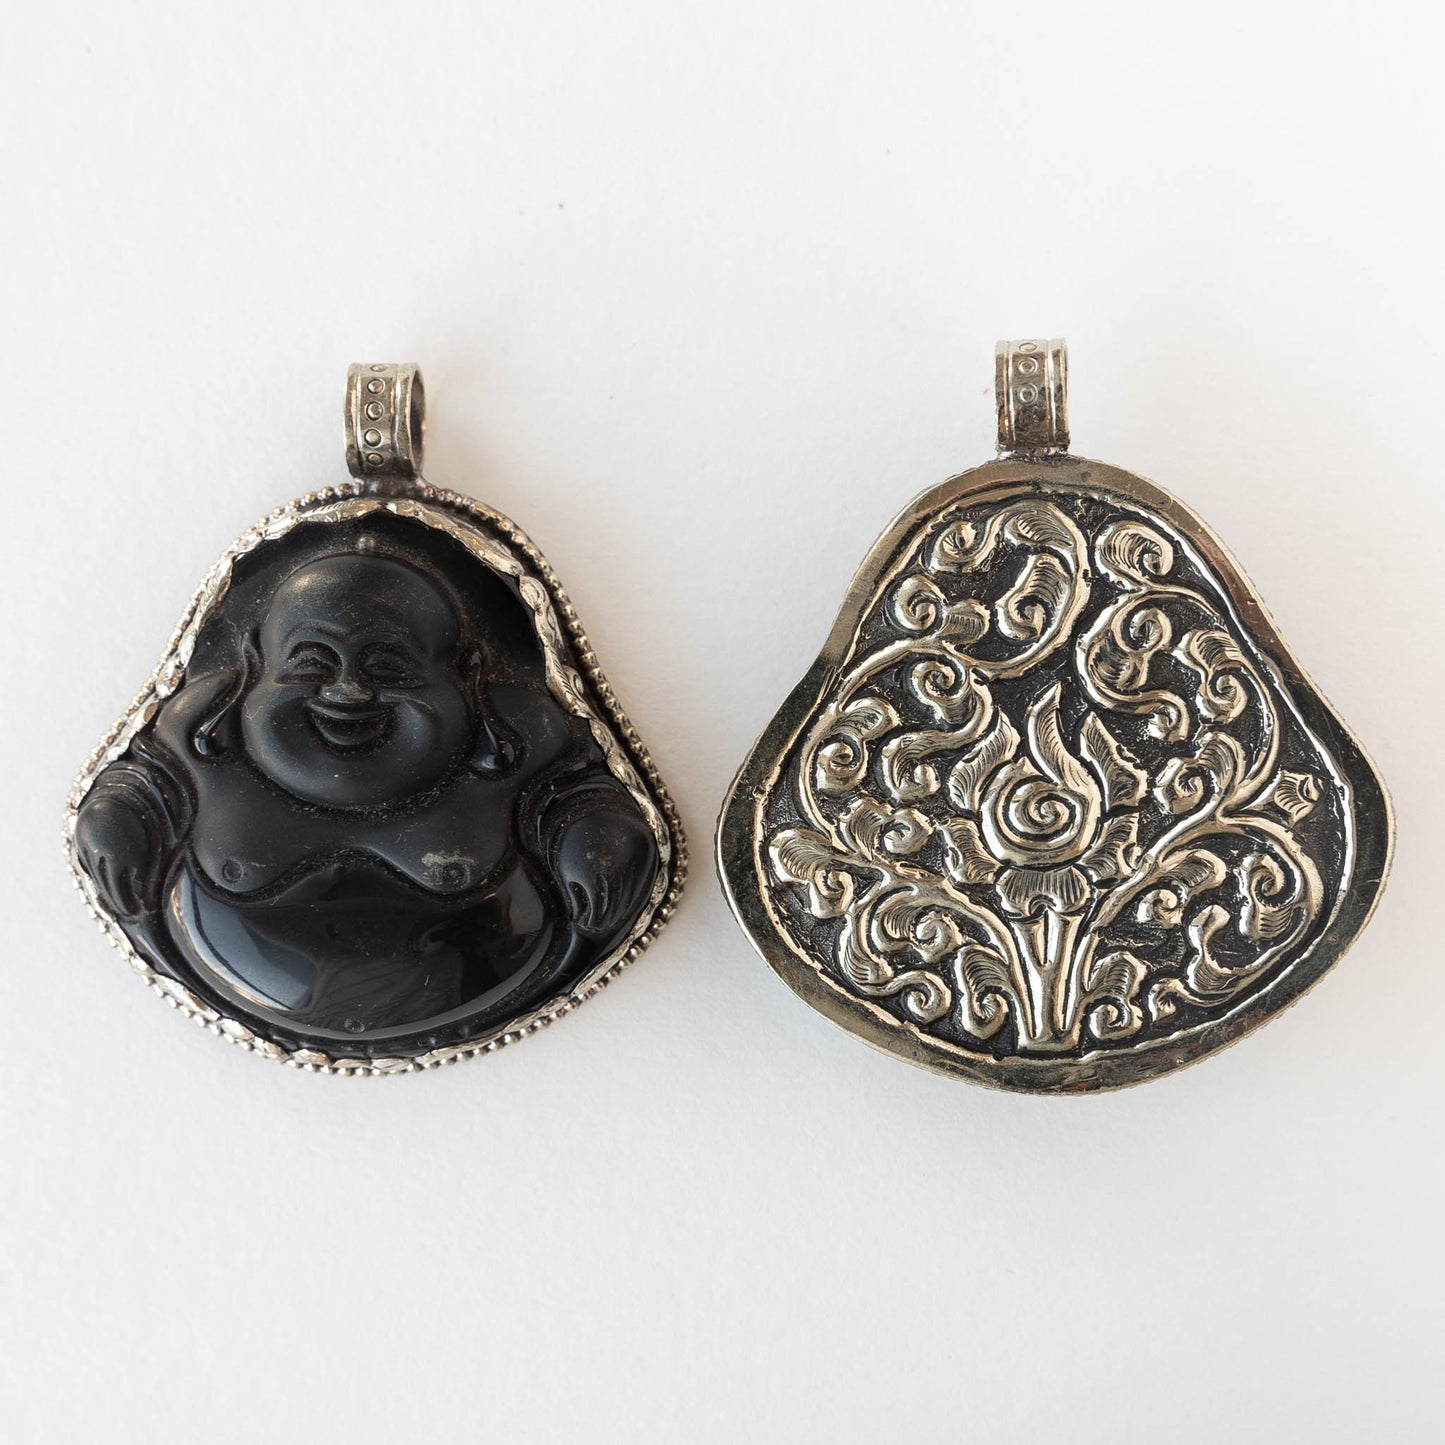 51mm Smiling Buddha Pendant - Black Matte Obsidian - 1 piece